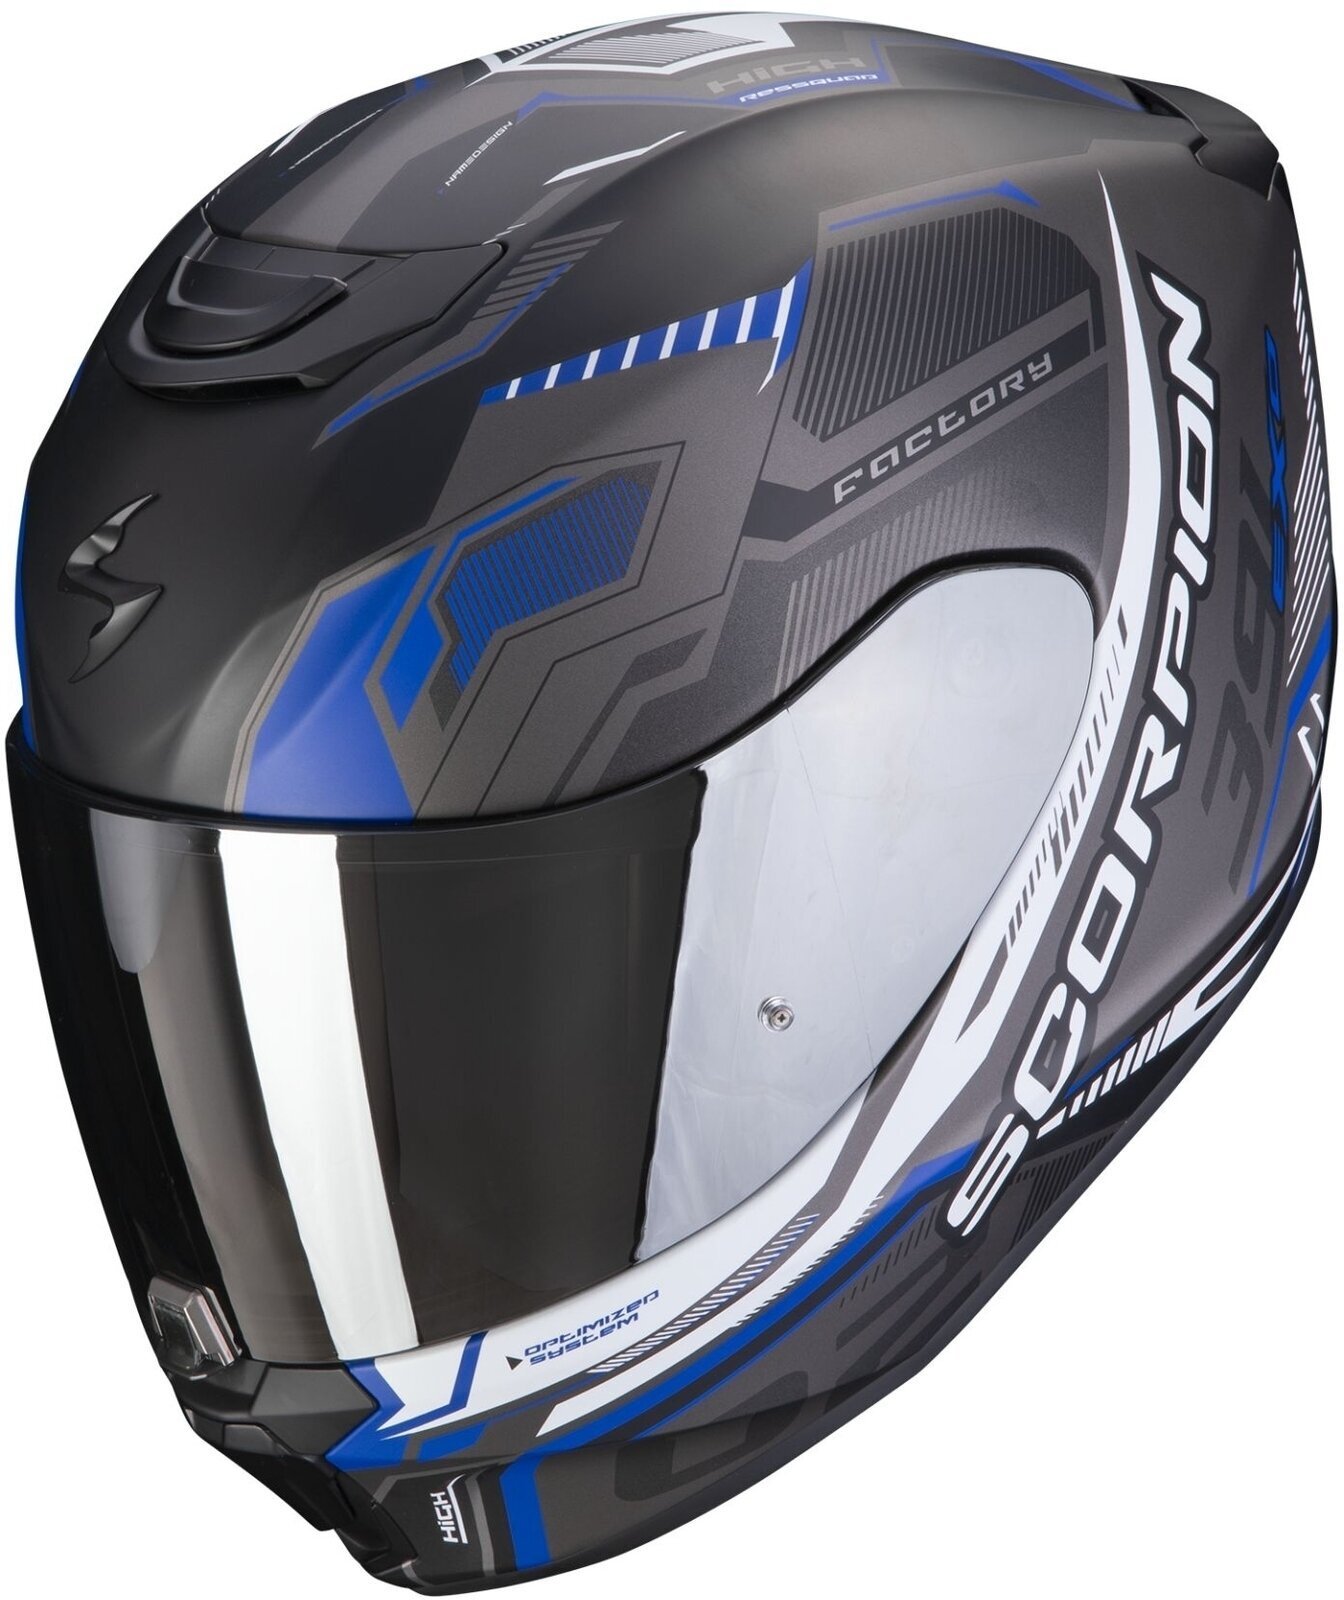 Helmet Scorpion EXO 391 HAUT Black/Silver/Blue S Helmet